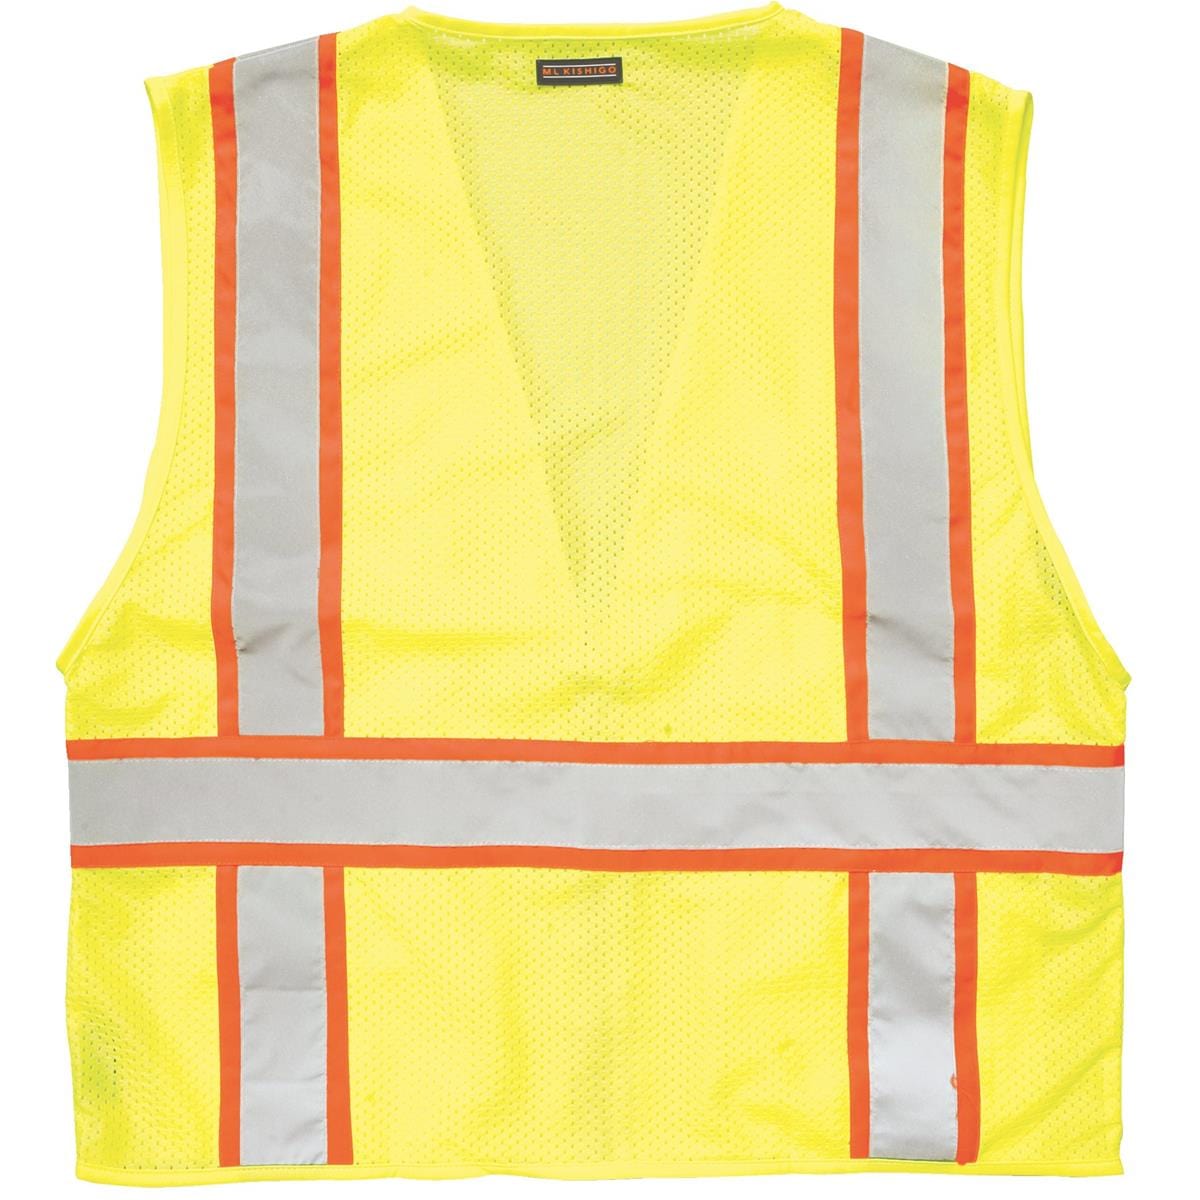 ANSI Class II Surveyor's Vest